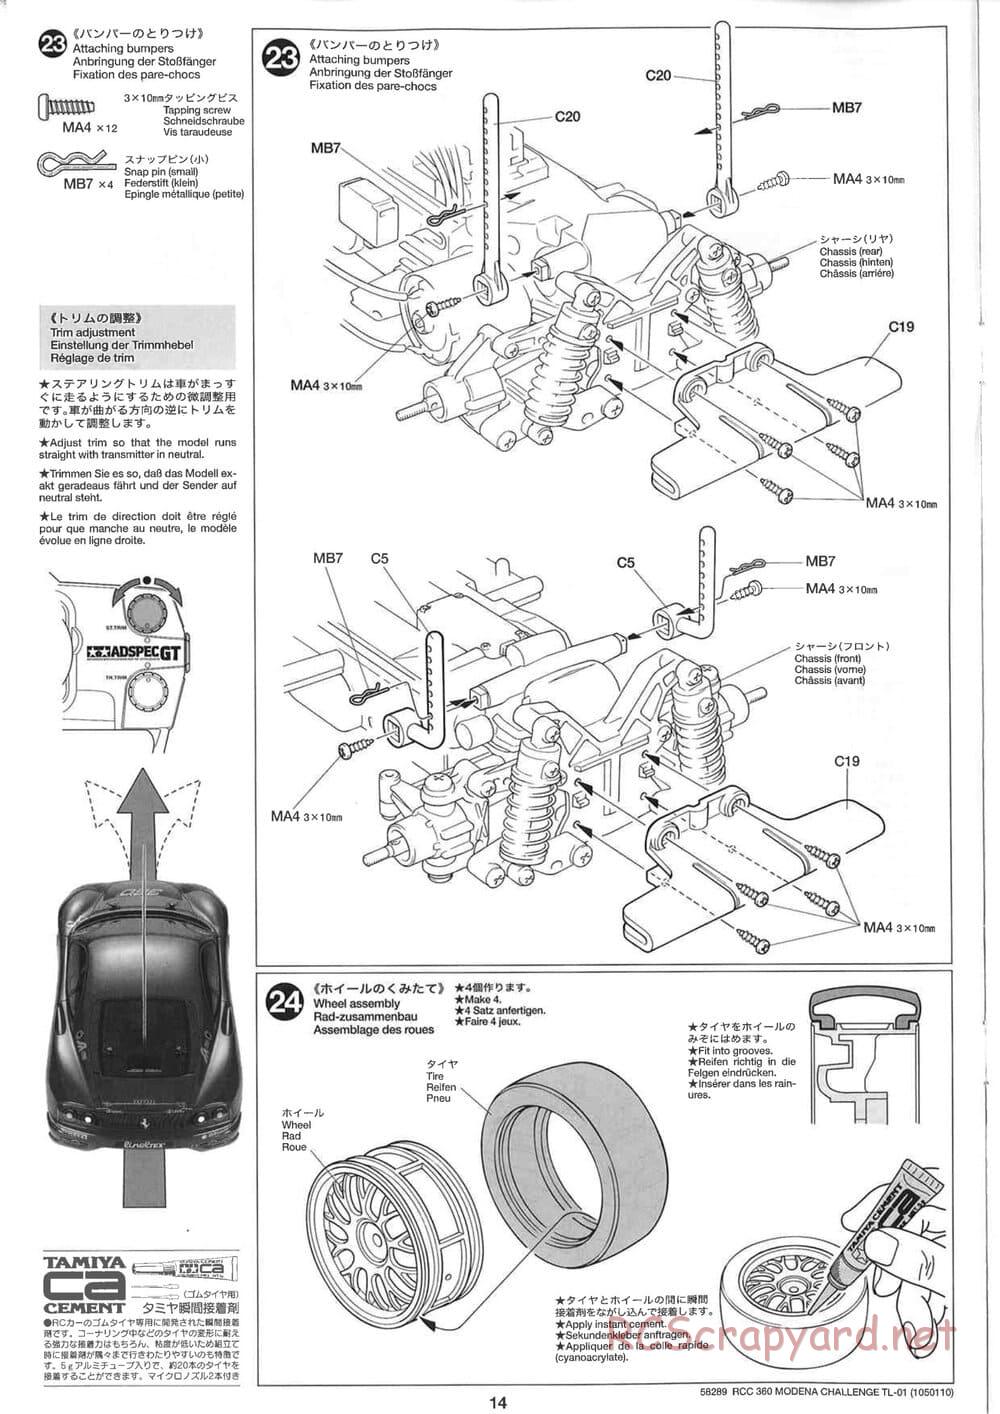 Tamiya - Ferrari 360 Modena Challenge - TL-01 Chassis - Manual - Page 14